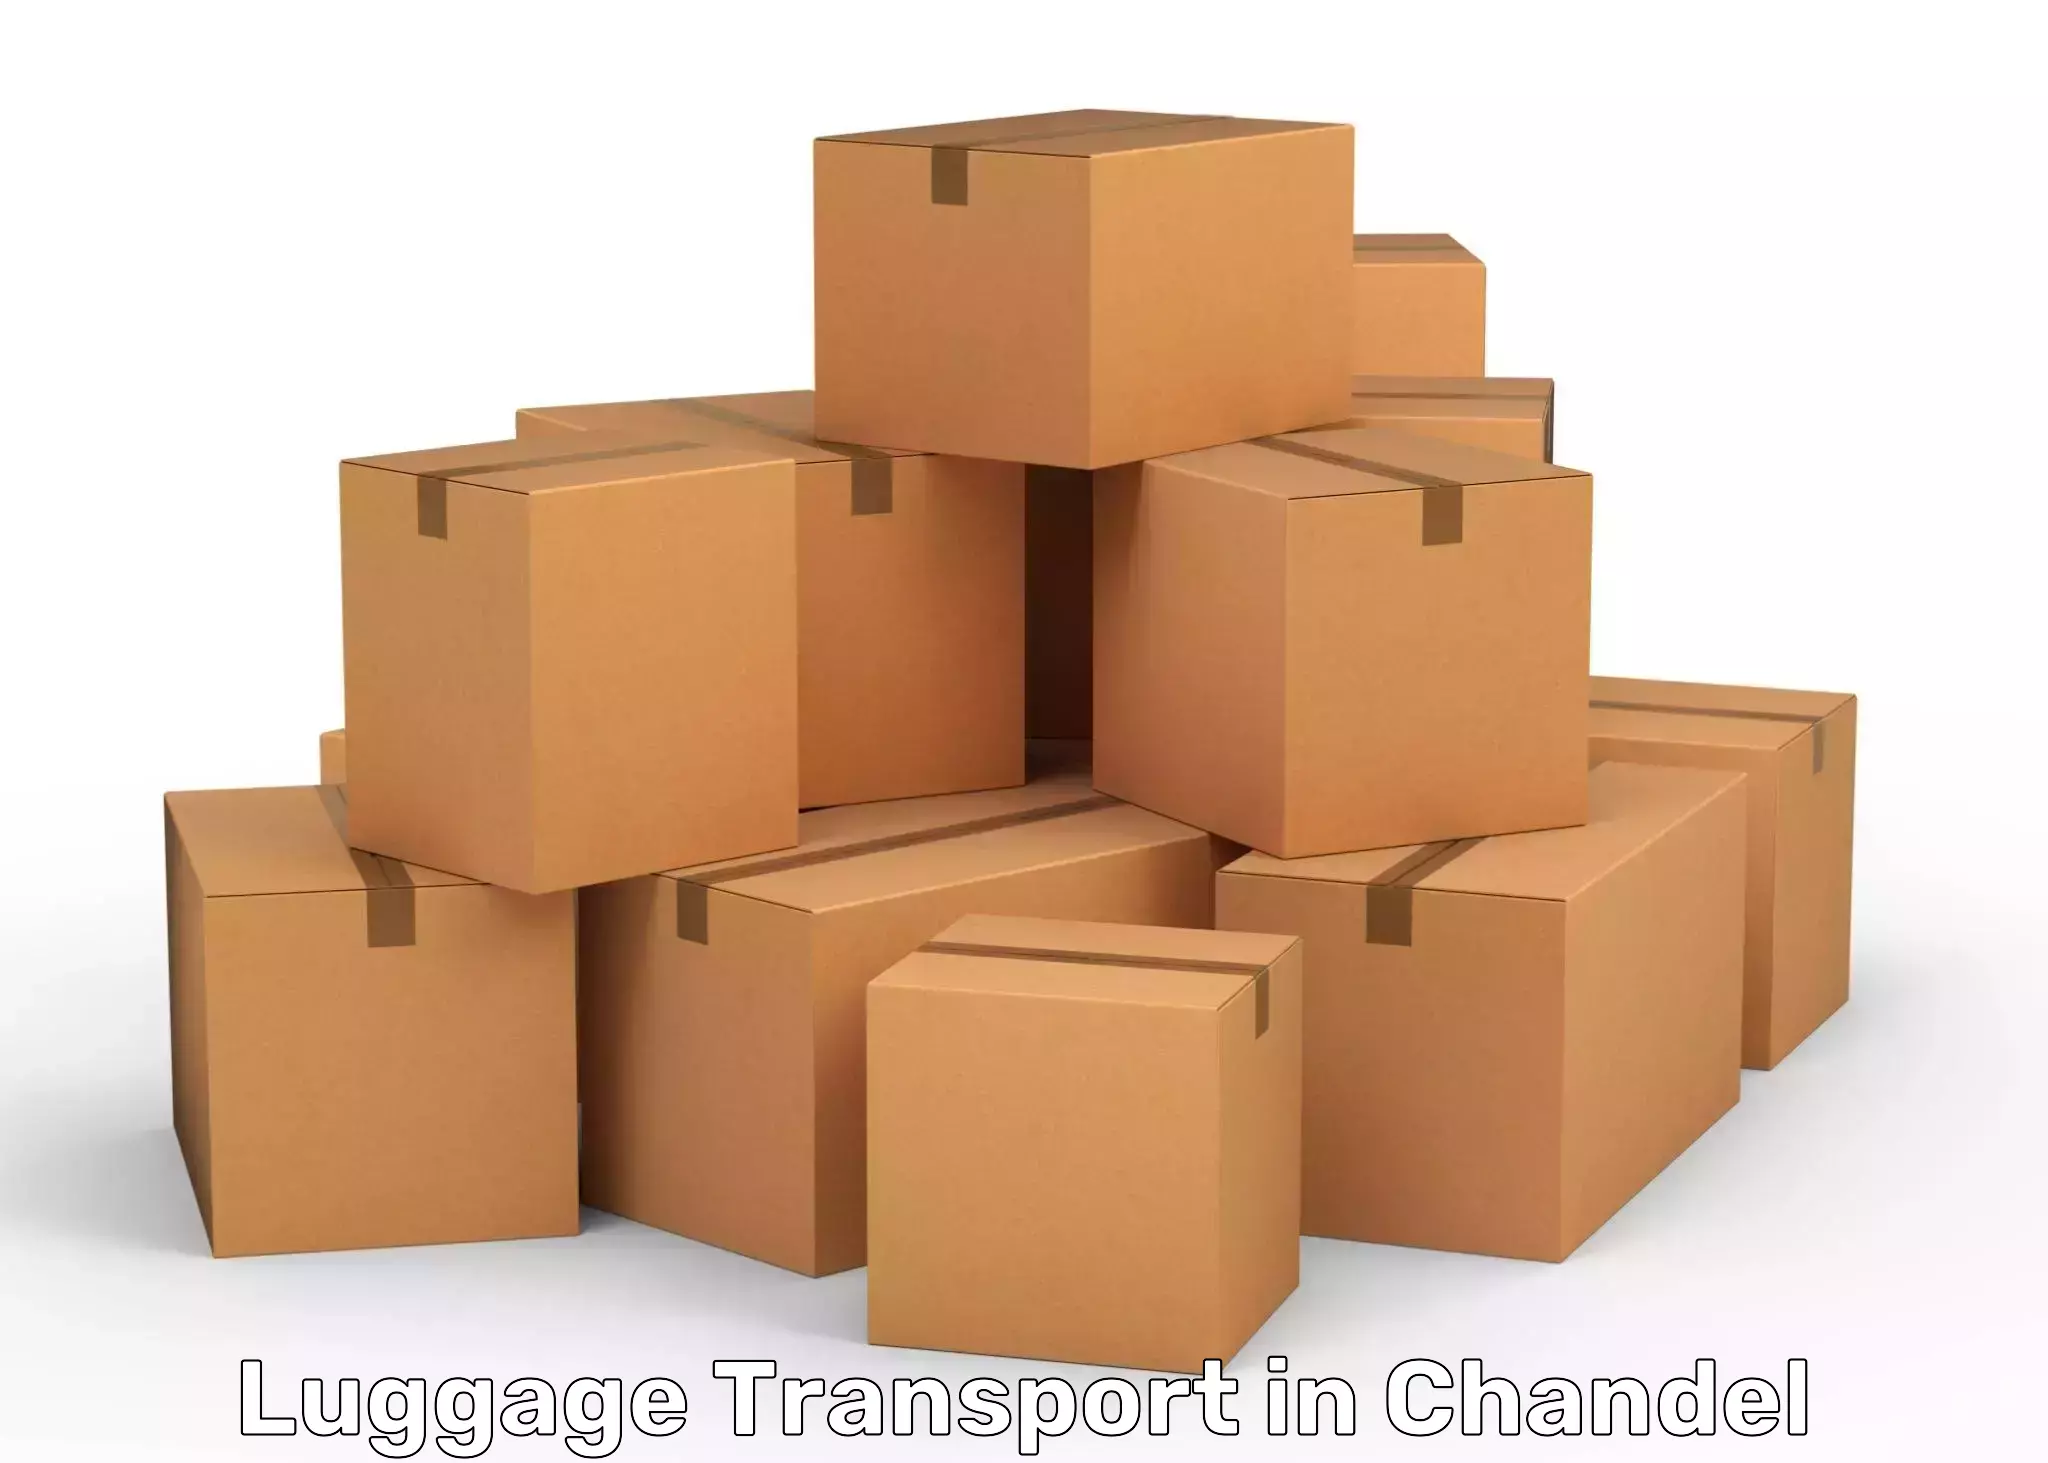 Rural baggage transport in Chandel